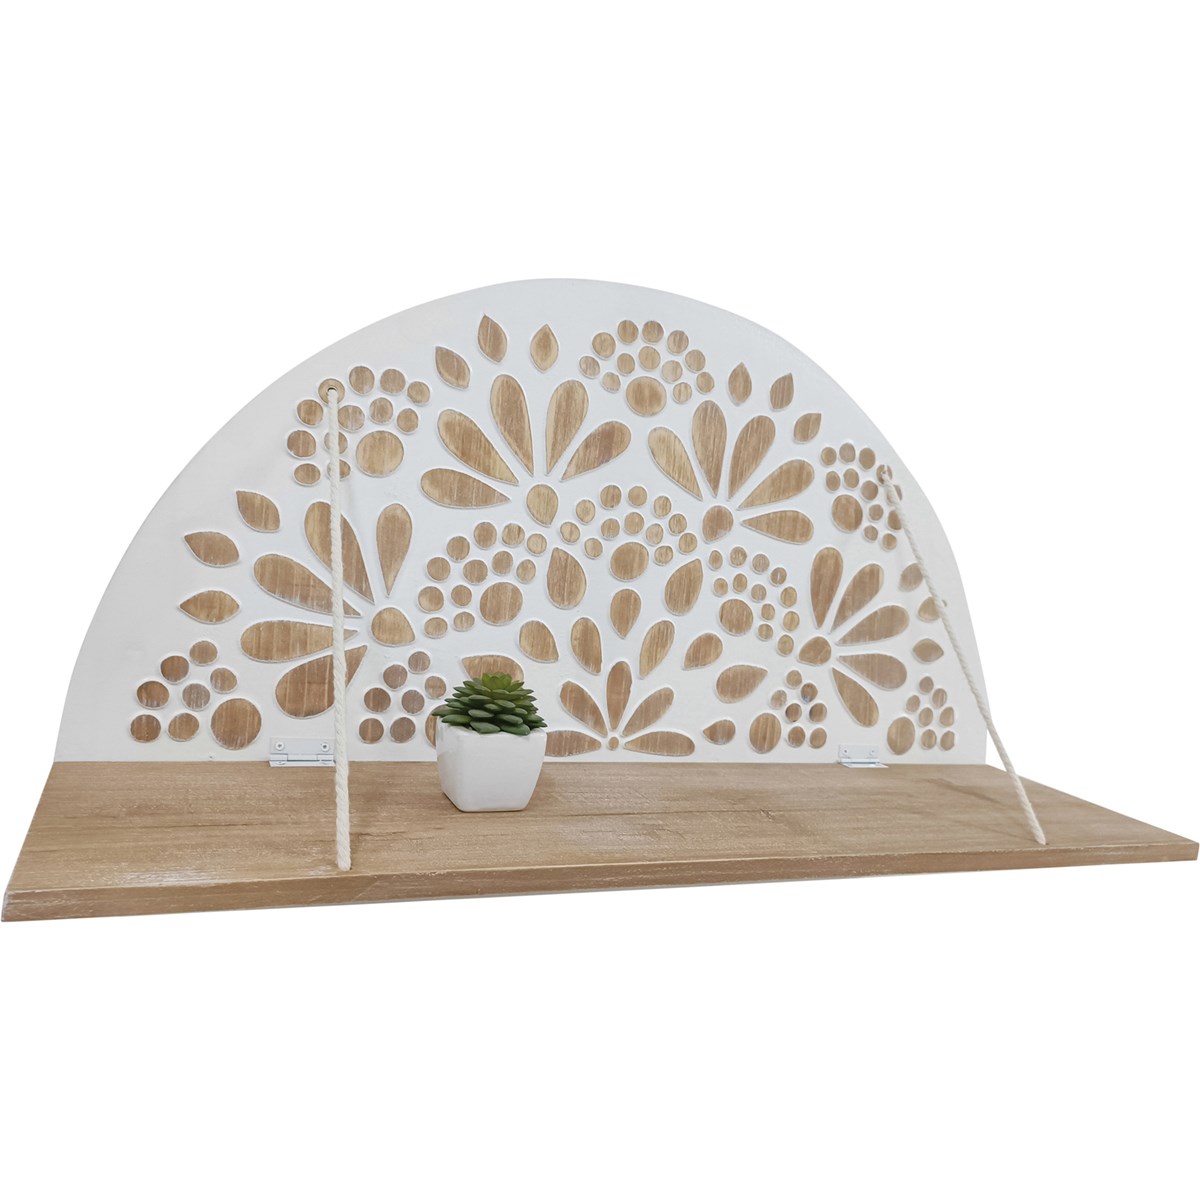 Mandala Shelf - Wood, Cotton, Metal